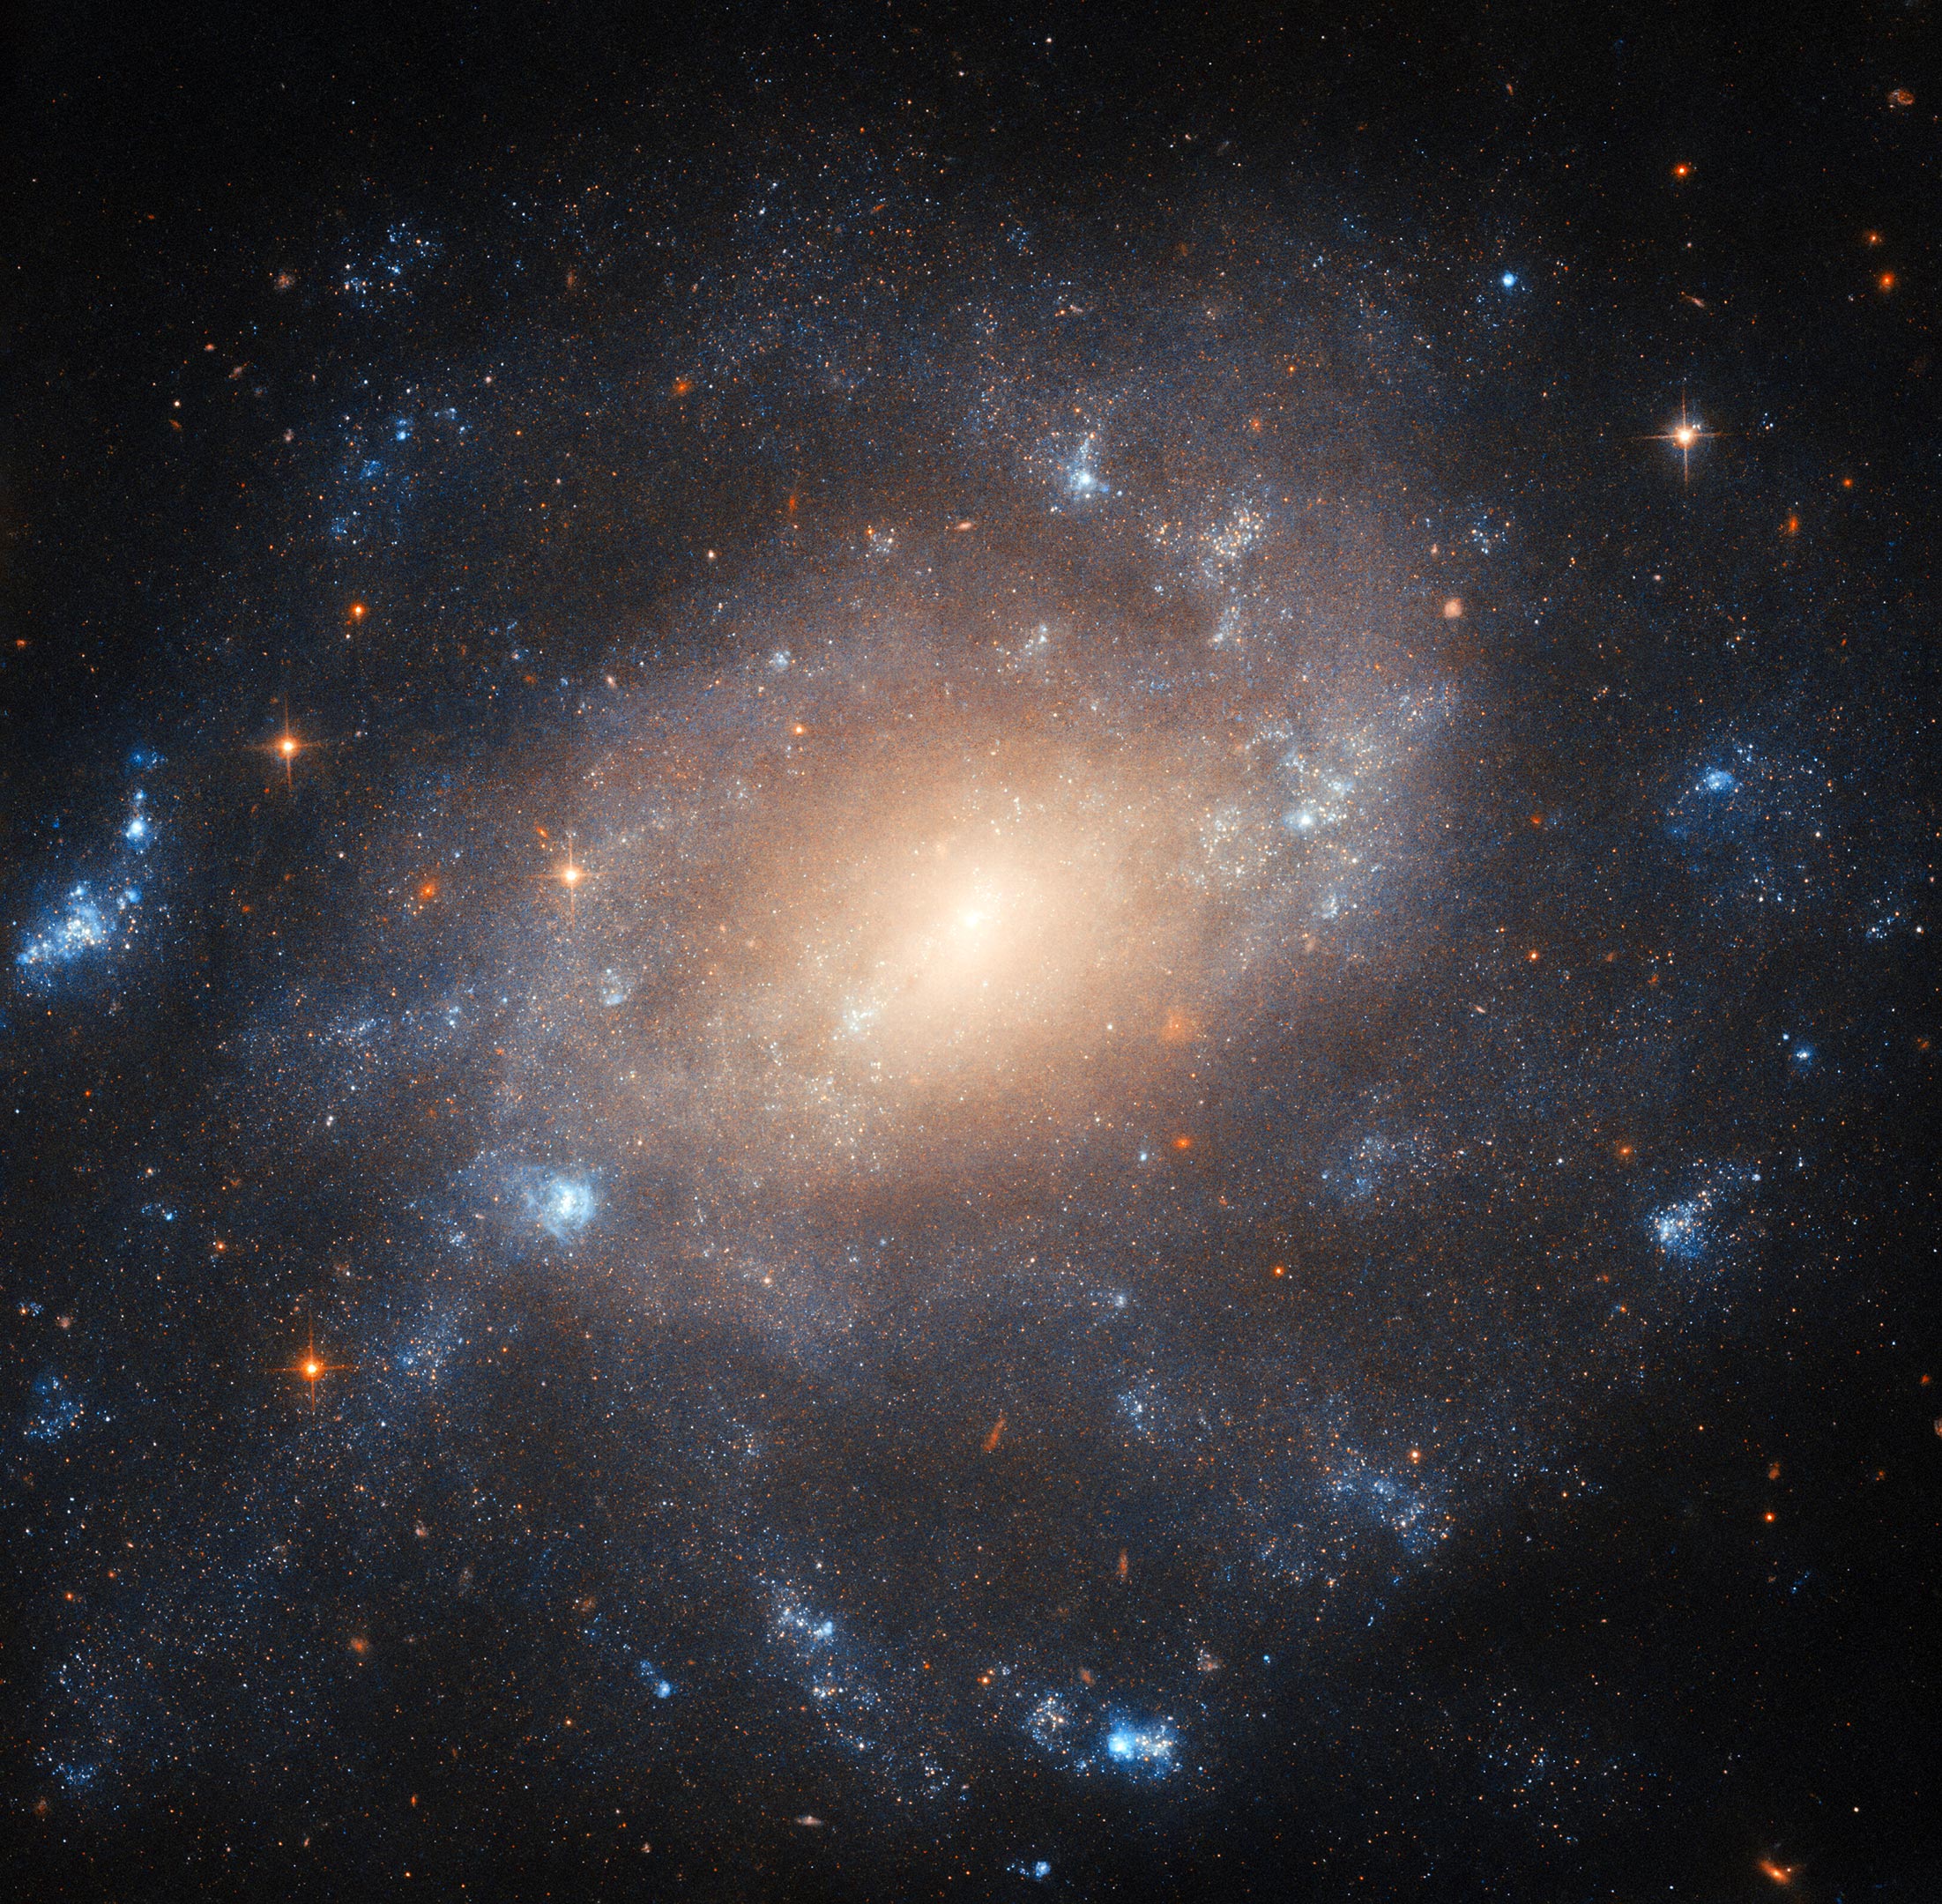 Hubble revela el núcleo brillante de una histórica galaxia espiral